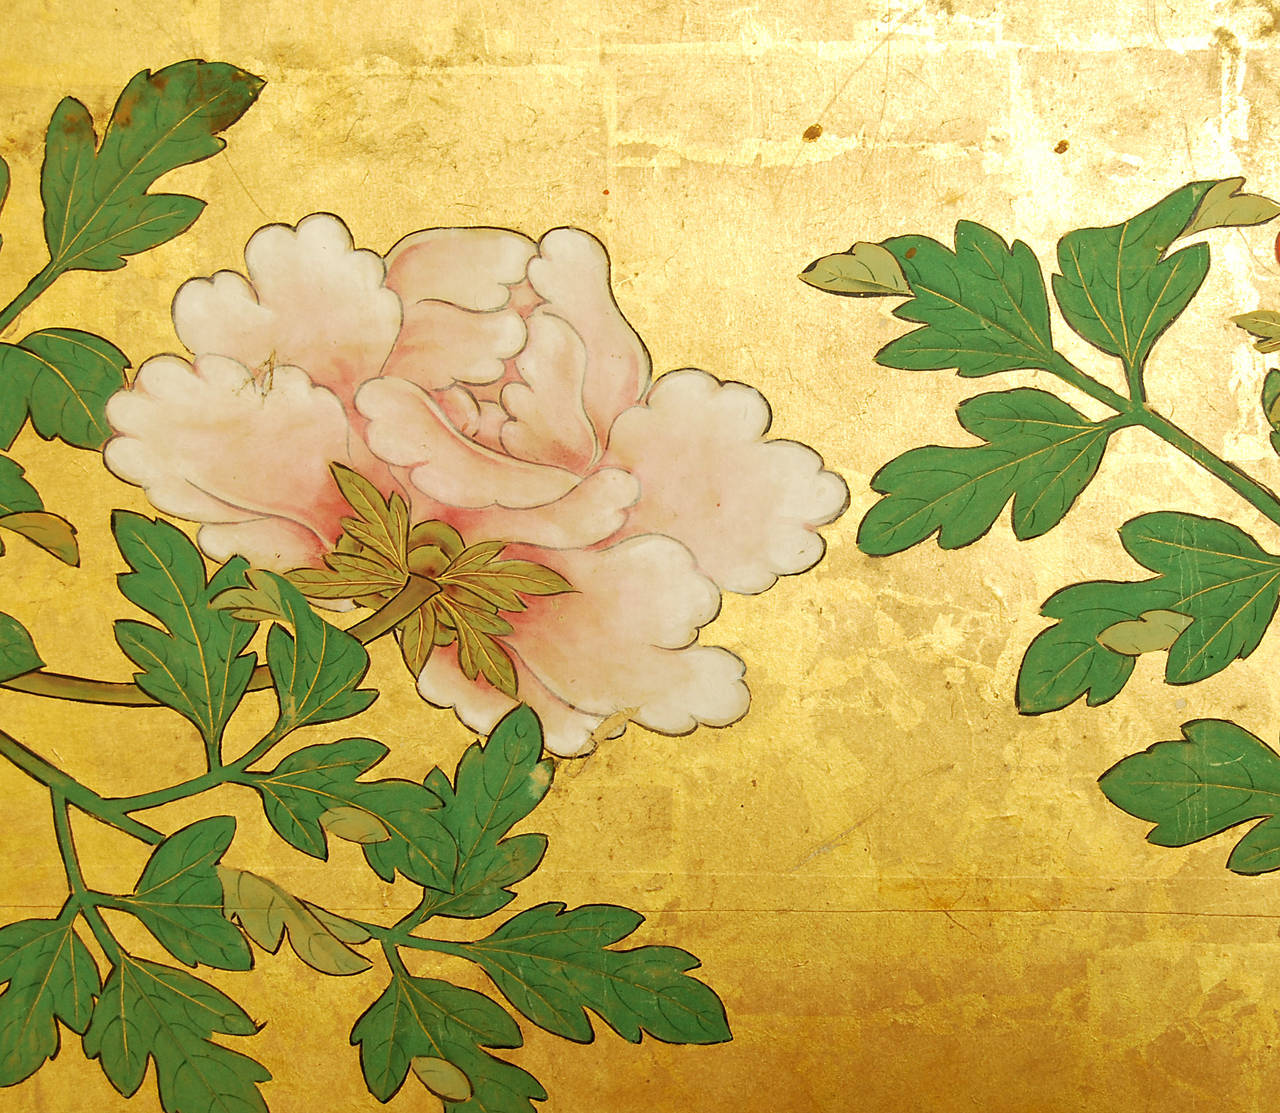 Late 17th century Kano school peony landscape screens. One of a pair of screens signed: Hogan Josen Fujiwara Chikanobu Hitsu - Kano Chikanobu (Shushin) (1660 - 1728).

Materials: Ink and pigment on gold leaf and paper

Dimensions: H 150cm x W